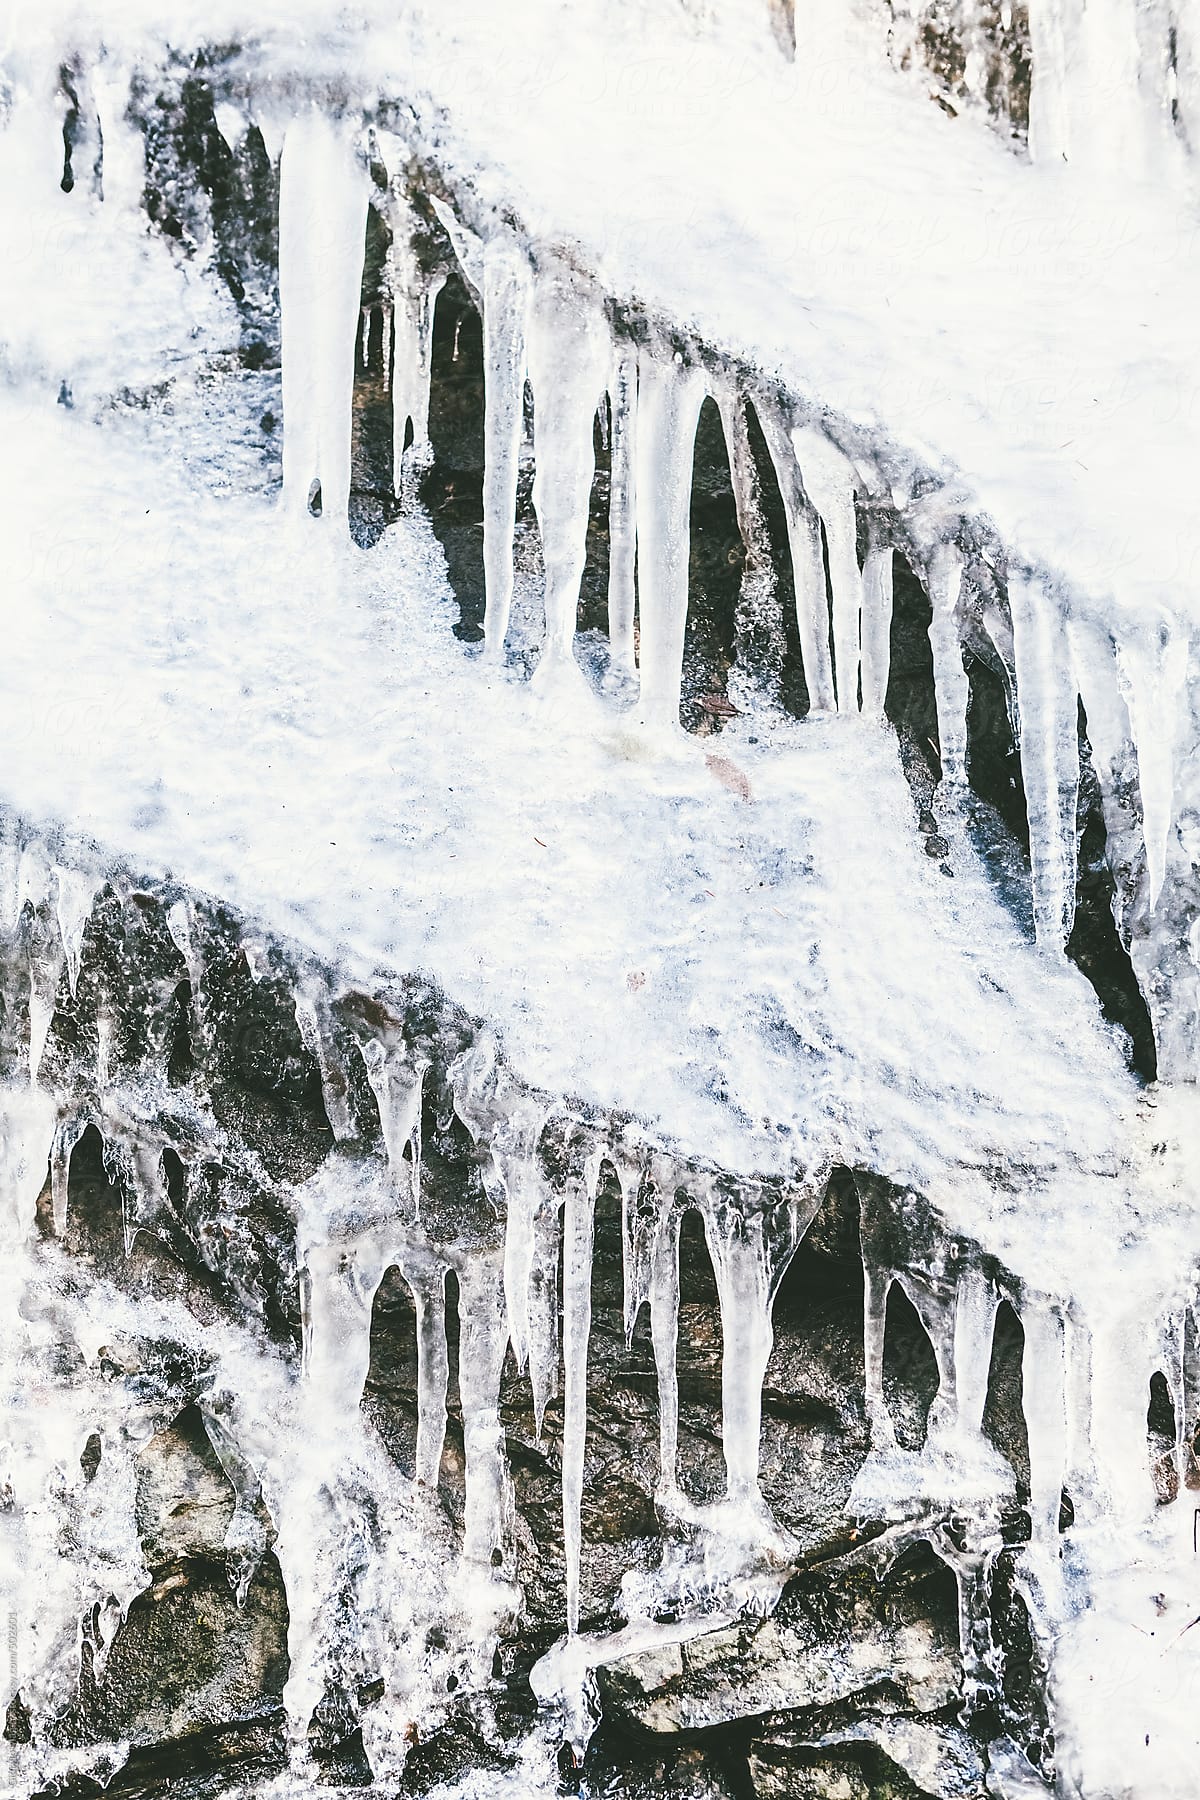 Frozen Icicles Melting on Rocks, Winter Season